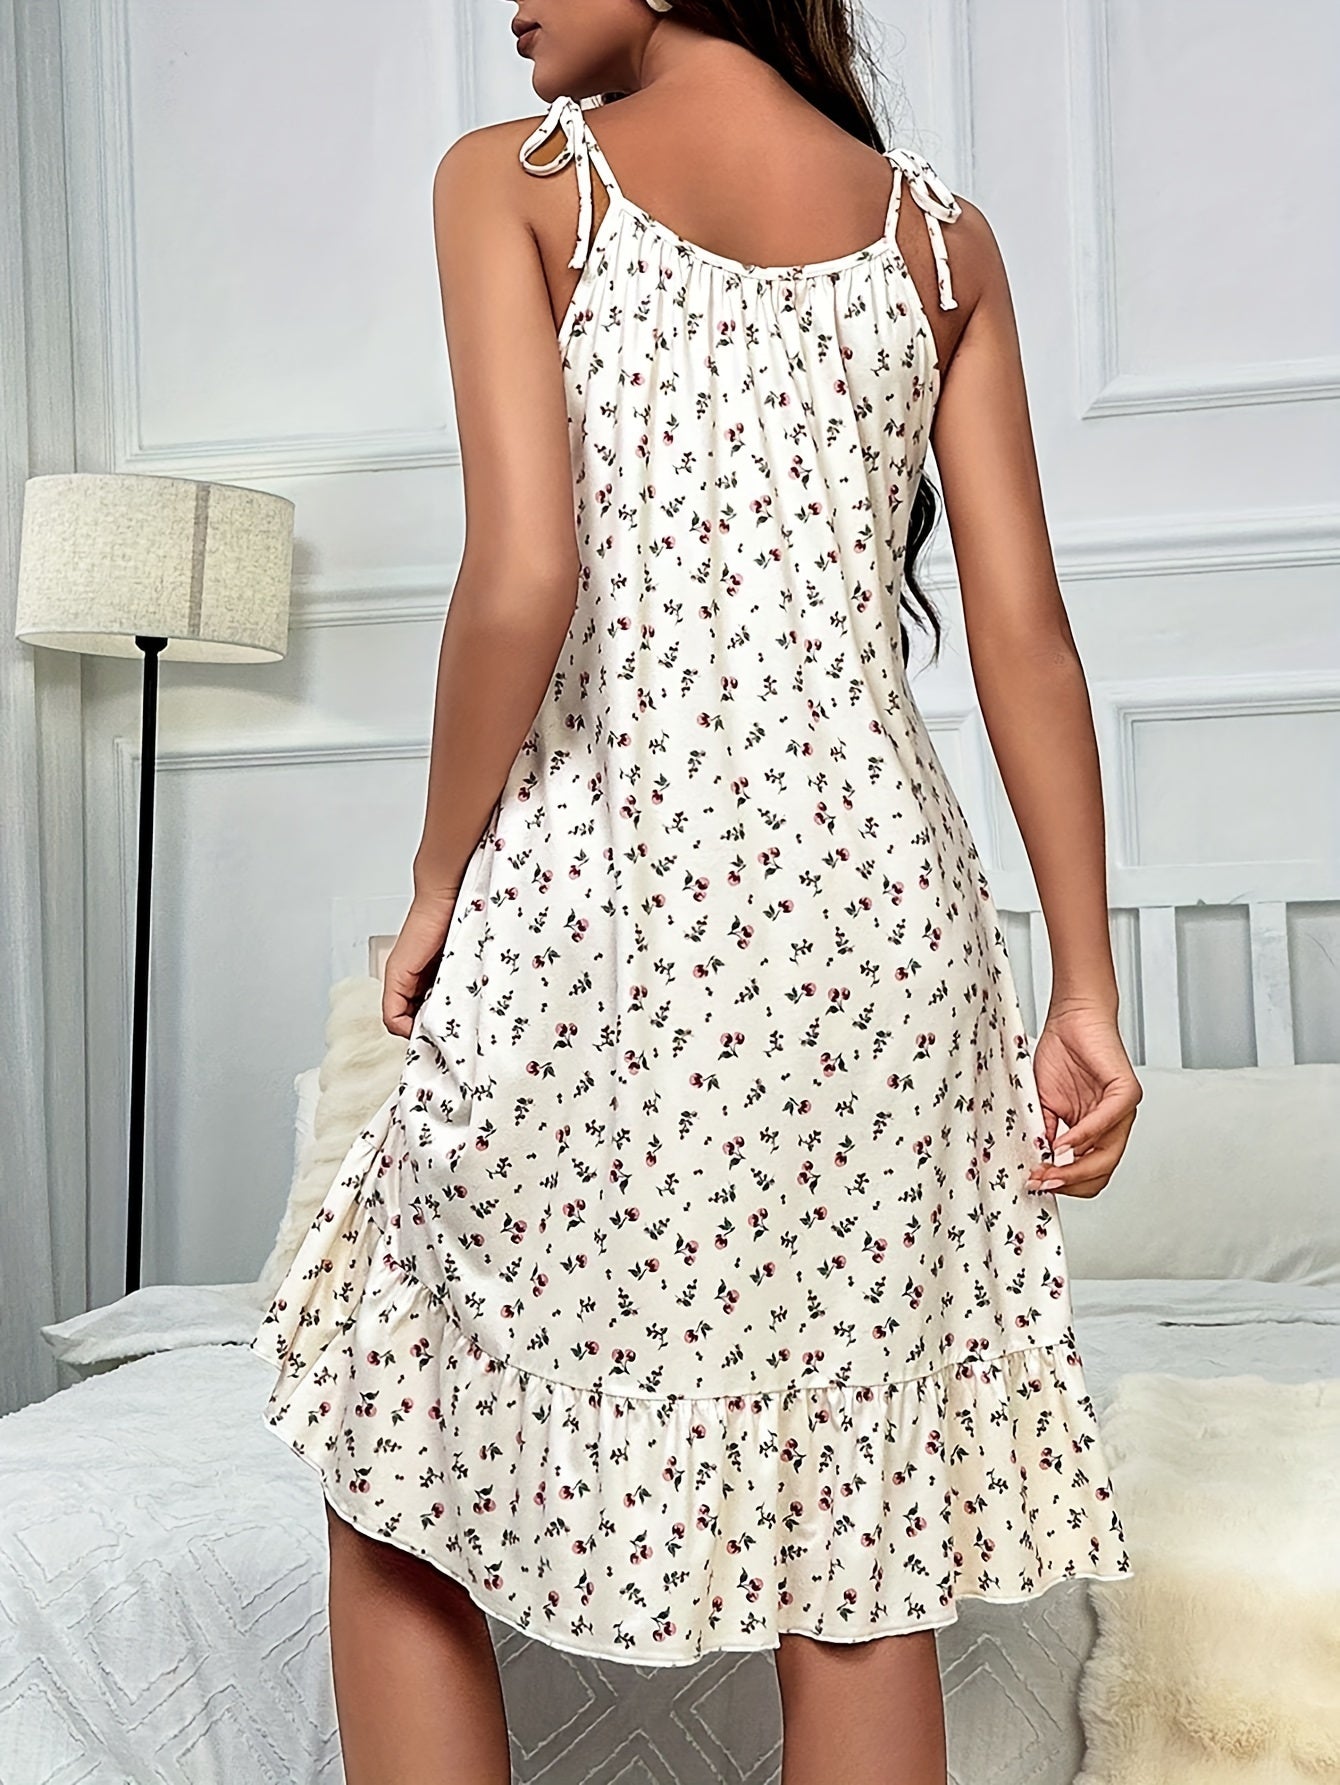 Ditsy Floral Nightgown - Women's Elegant and Comfortable Sleepwear - Women's Sleepwear